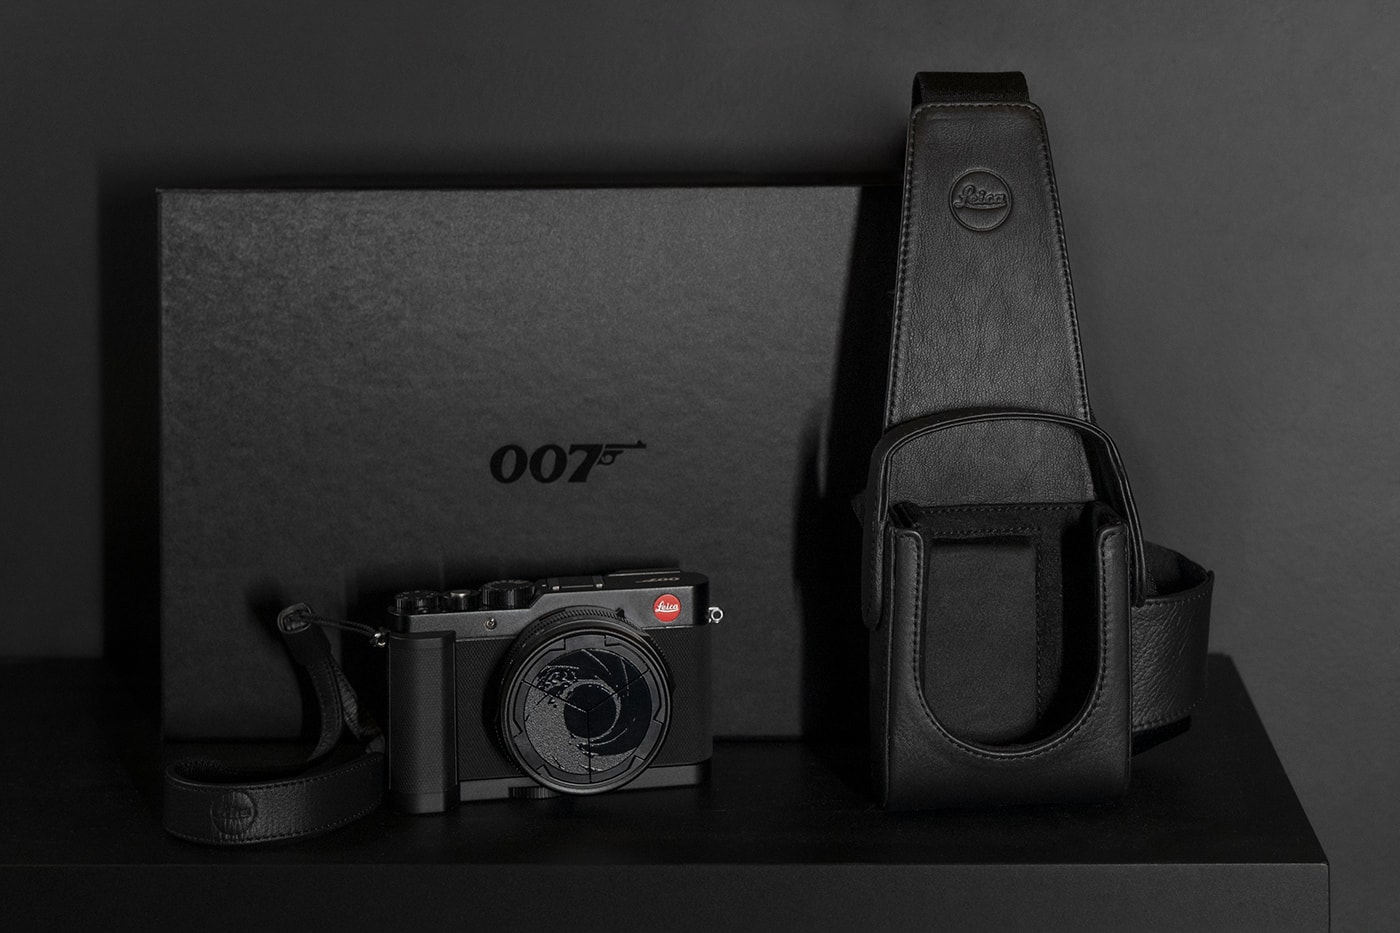 Leica 正式推出 D-Lux 7 007《James Bond》特別版限量便攜相機